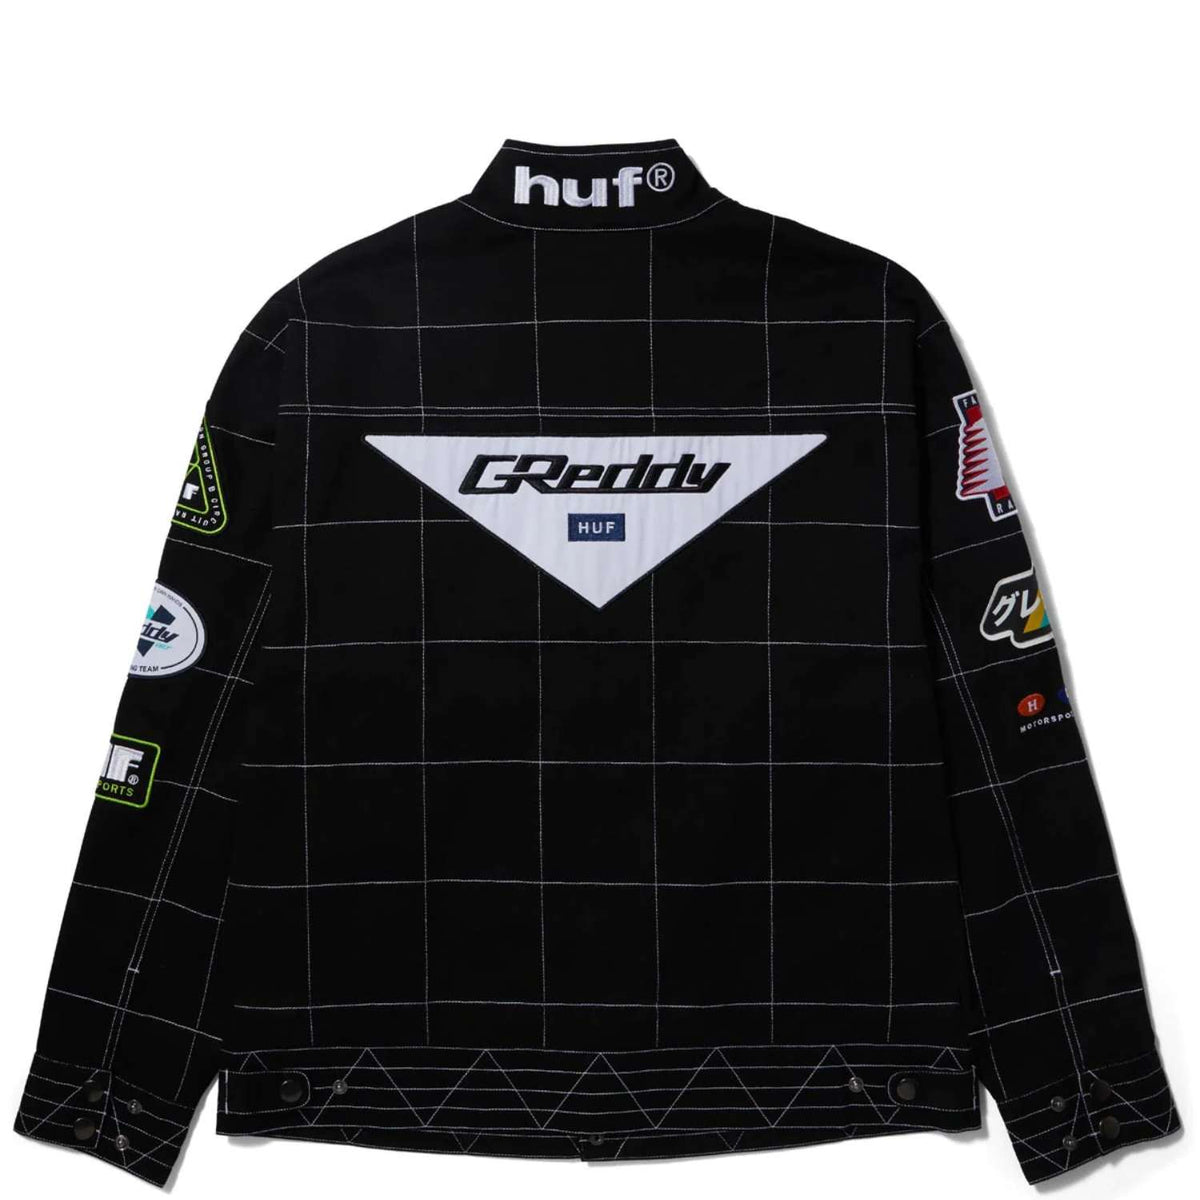 HUF X Greddy - Racing Team Jacket - Black